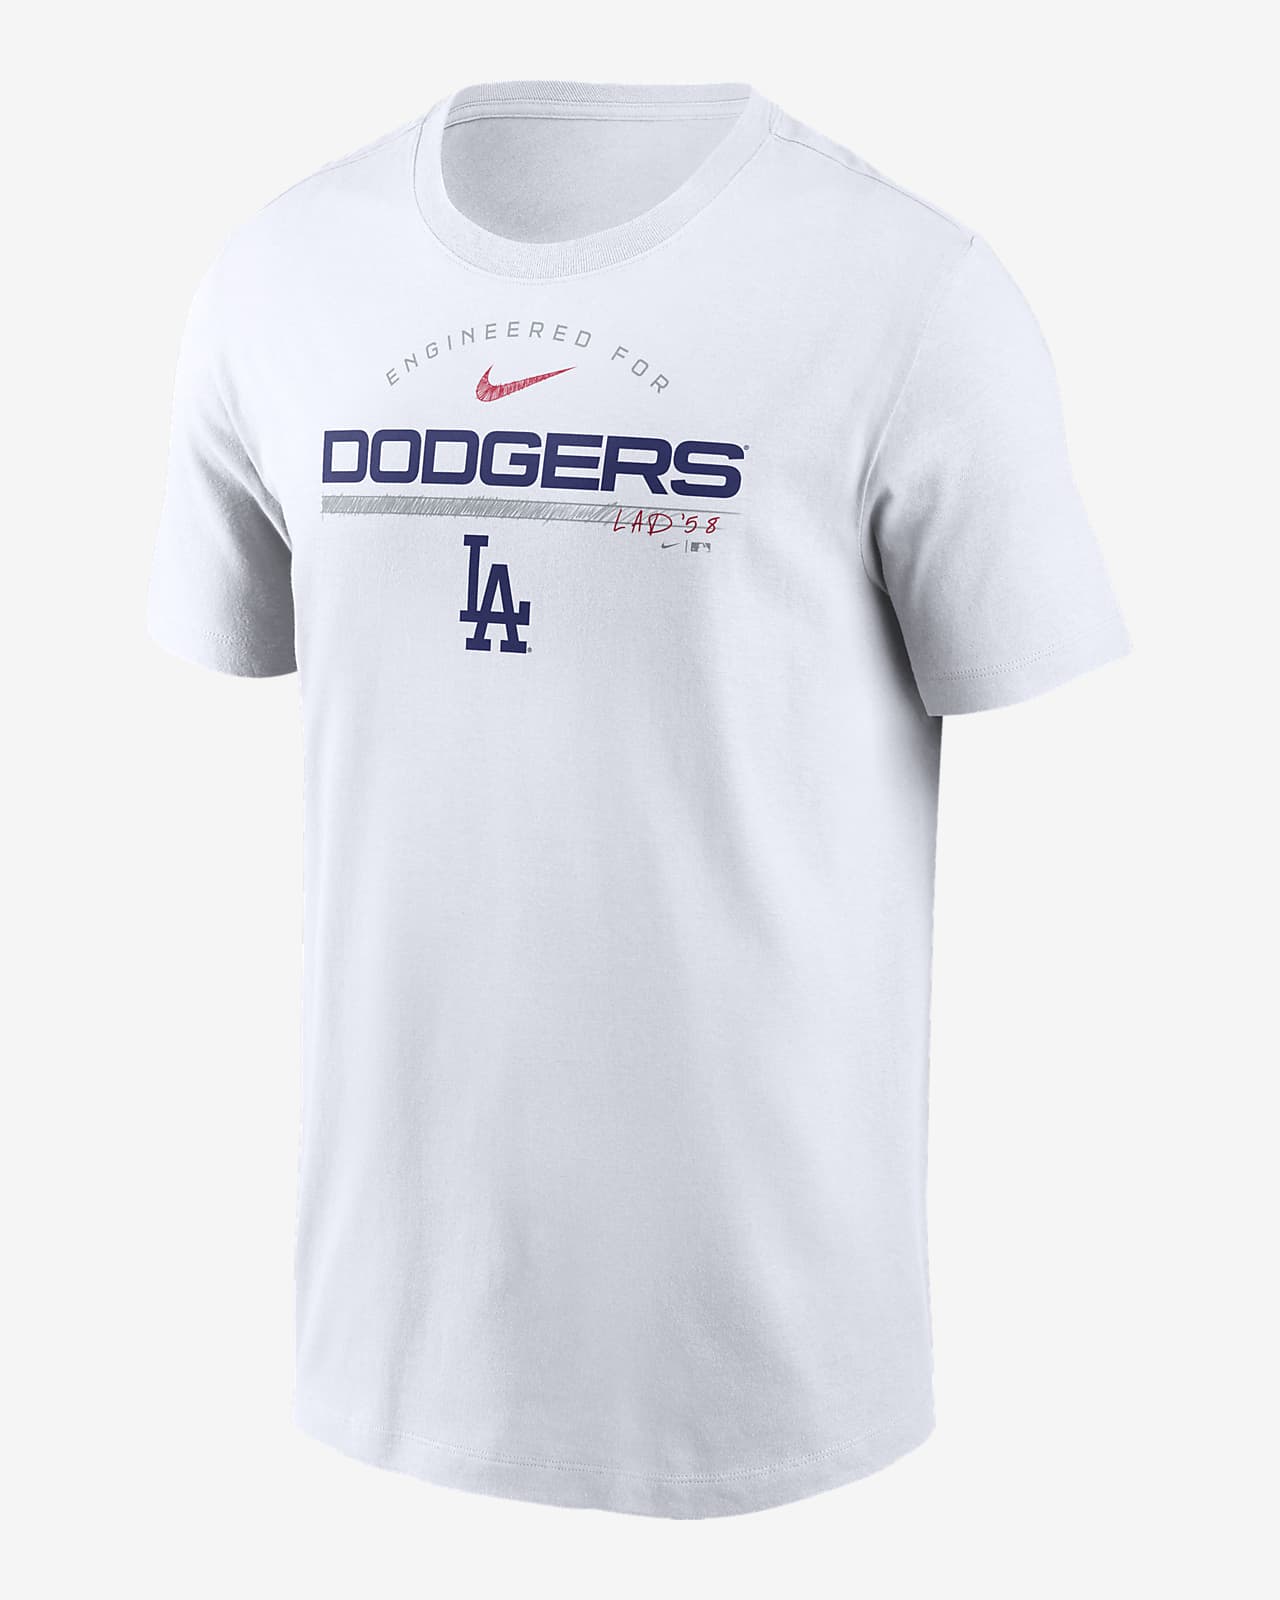 Los Angeles Dodgers Nike Gear, Dodgers Nike Jerseys, Polos, Shirts